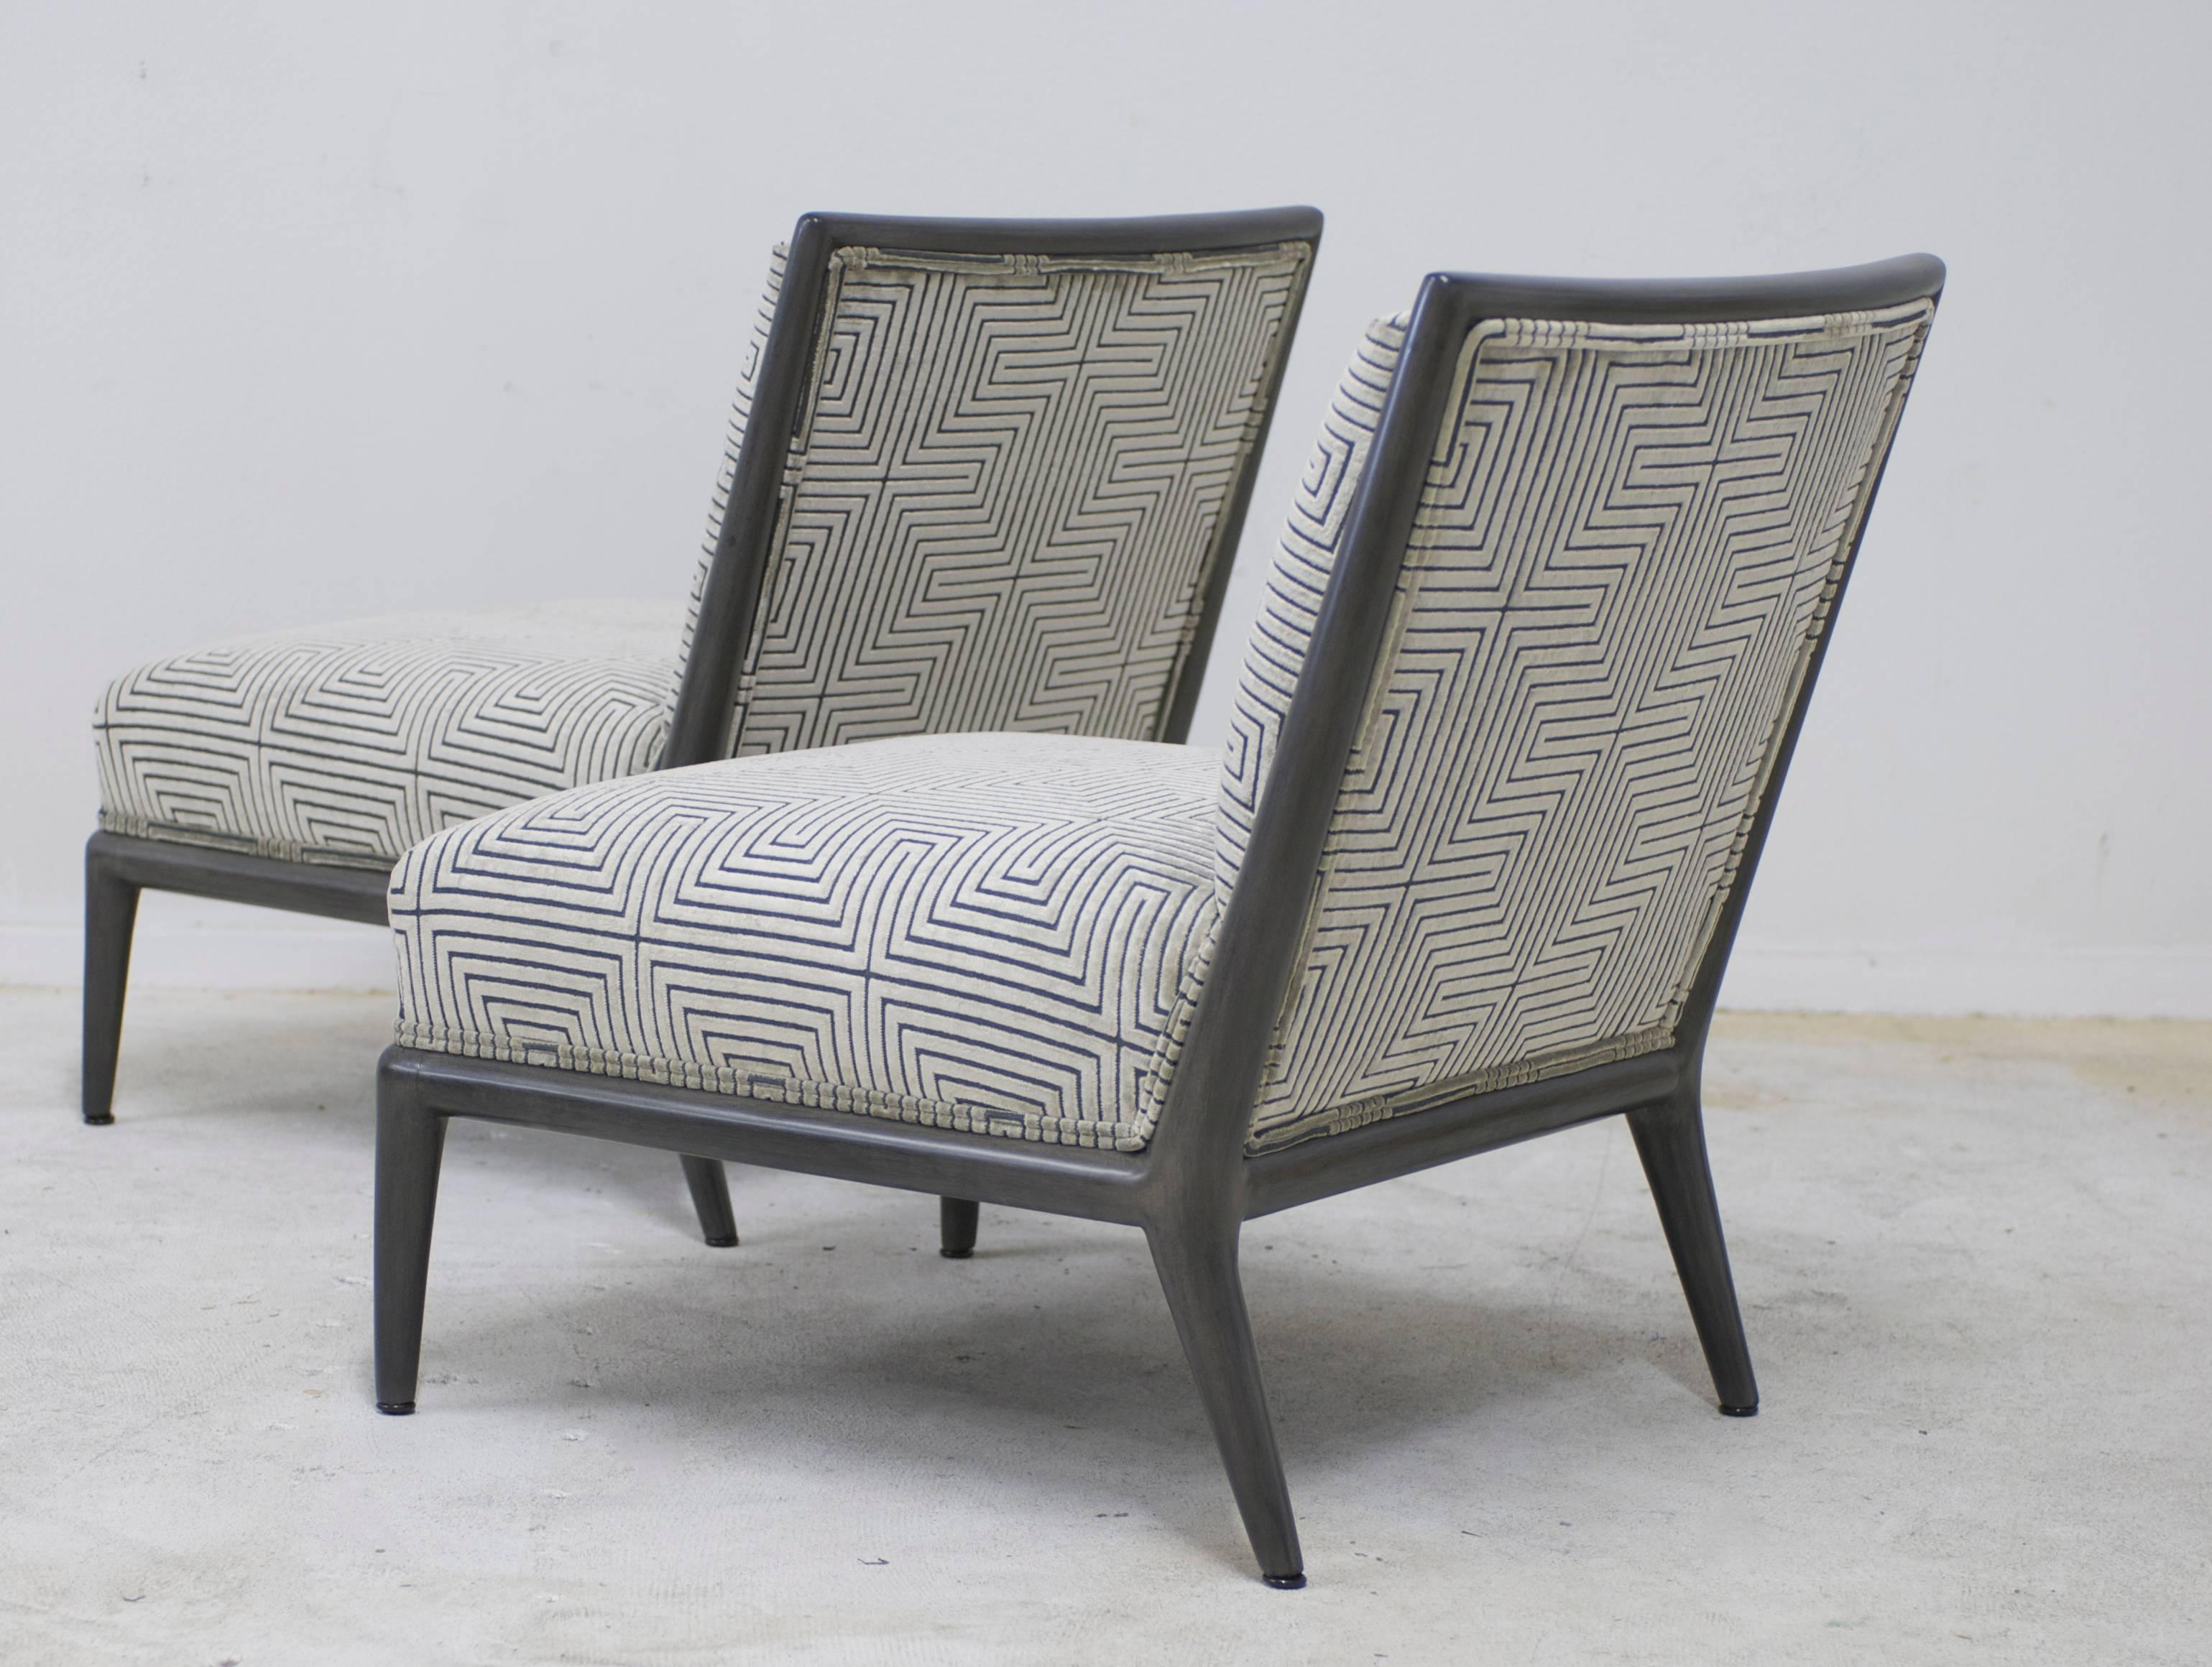 Pair of Charcoal Grey Finish Geometric Cut Velvet Mid-Century Slipper Chairs 1